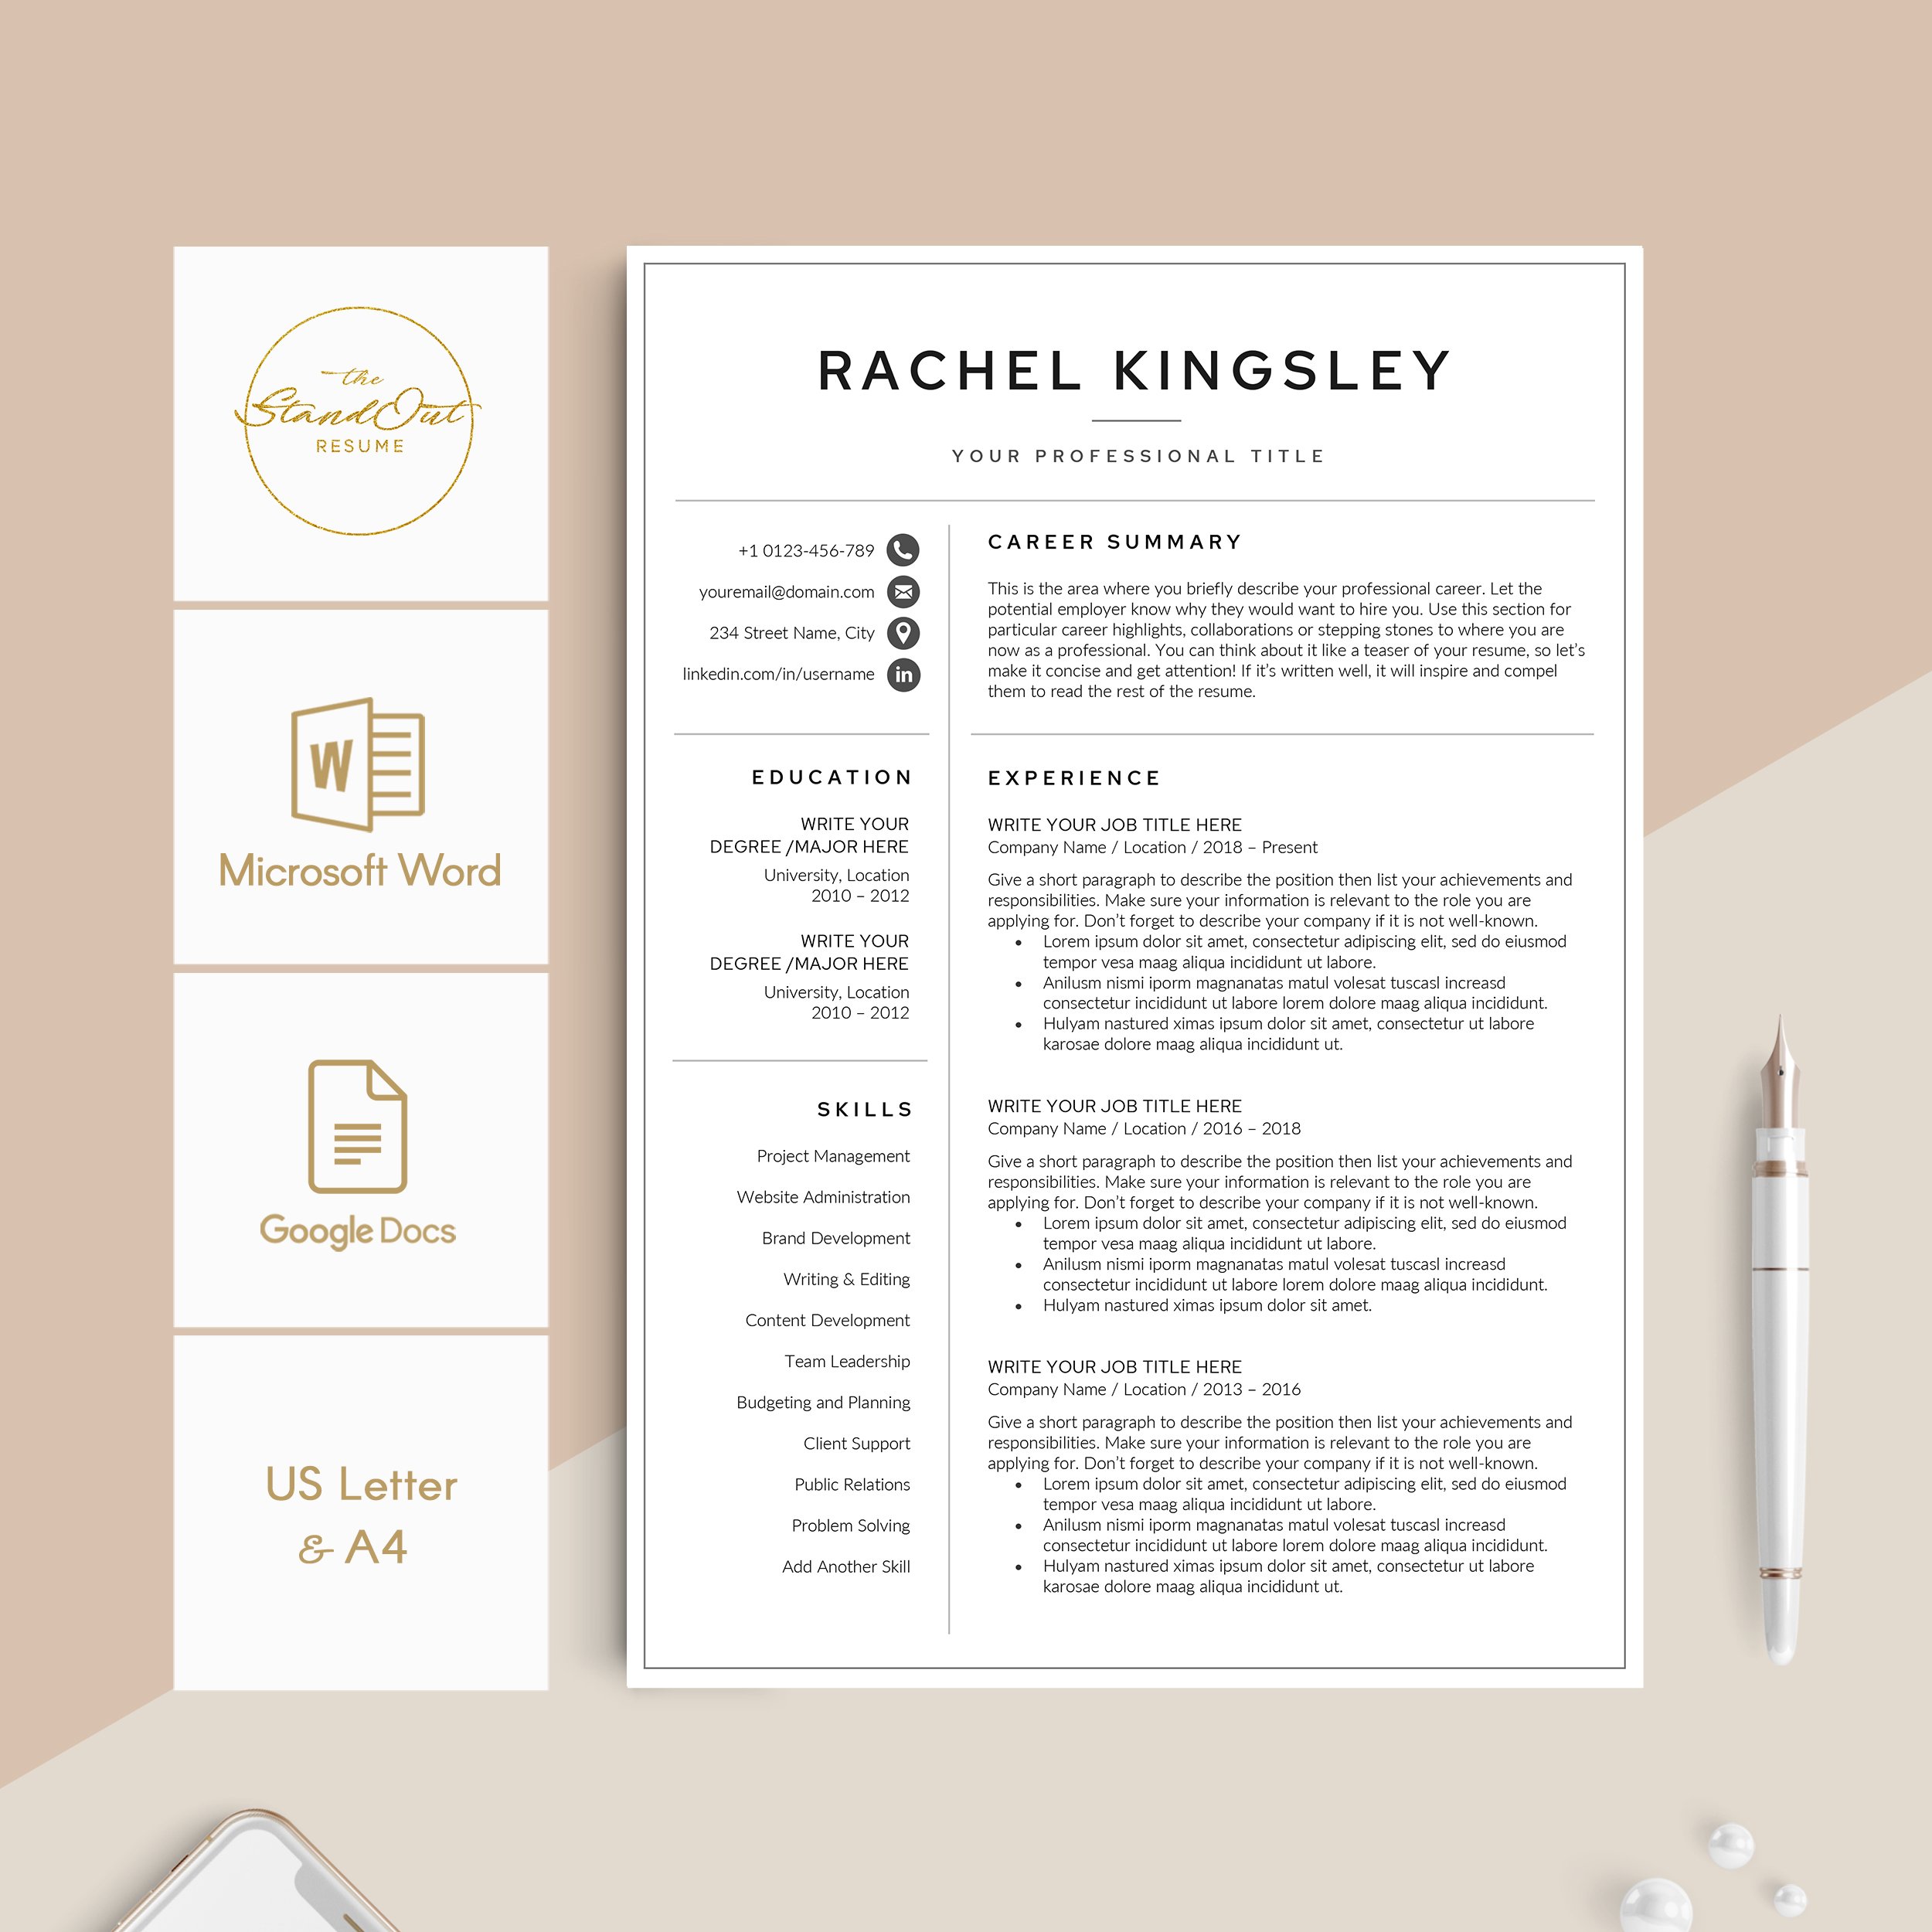 Resume/CV Template - RACHEL preview image.